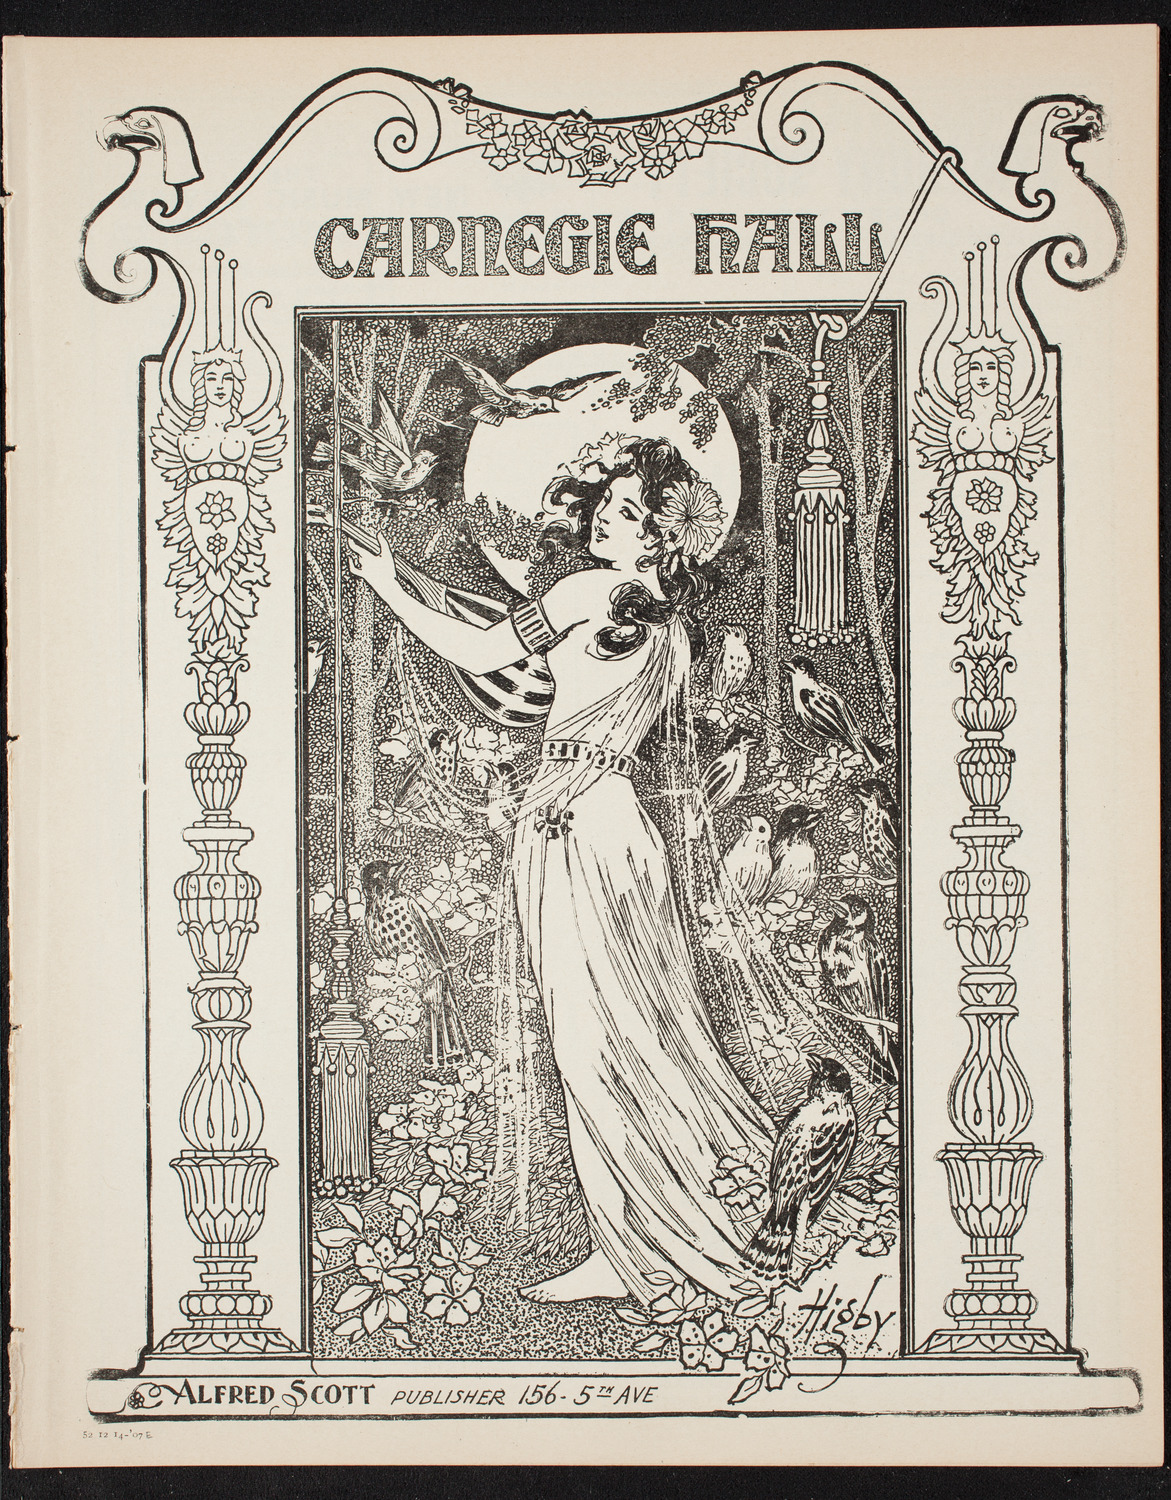 New York Philharmonic, December 14, 1907, program page 1